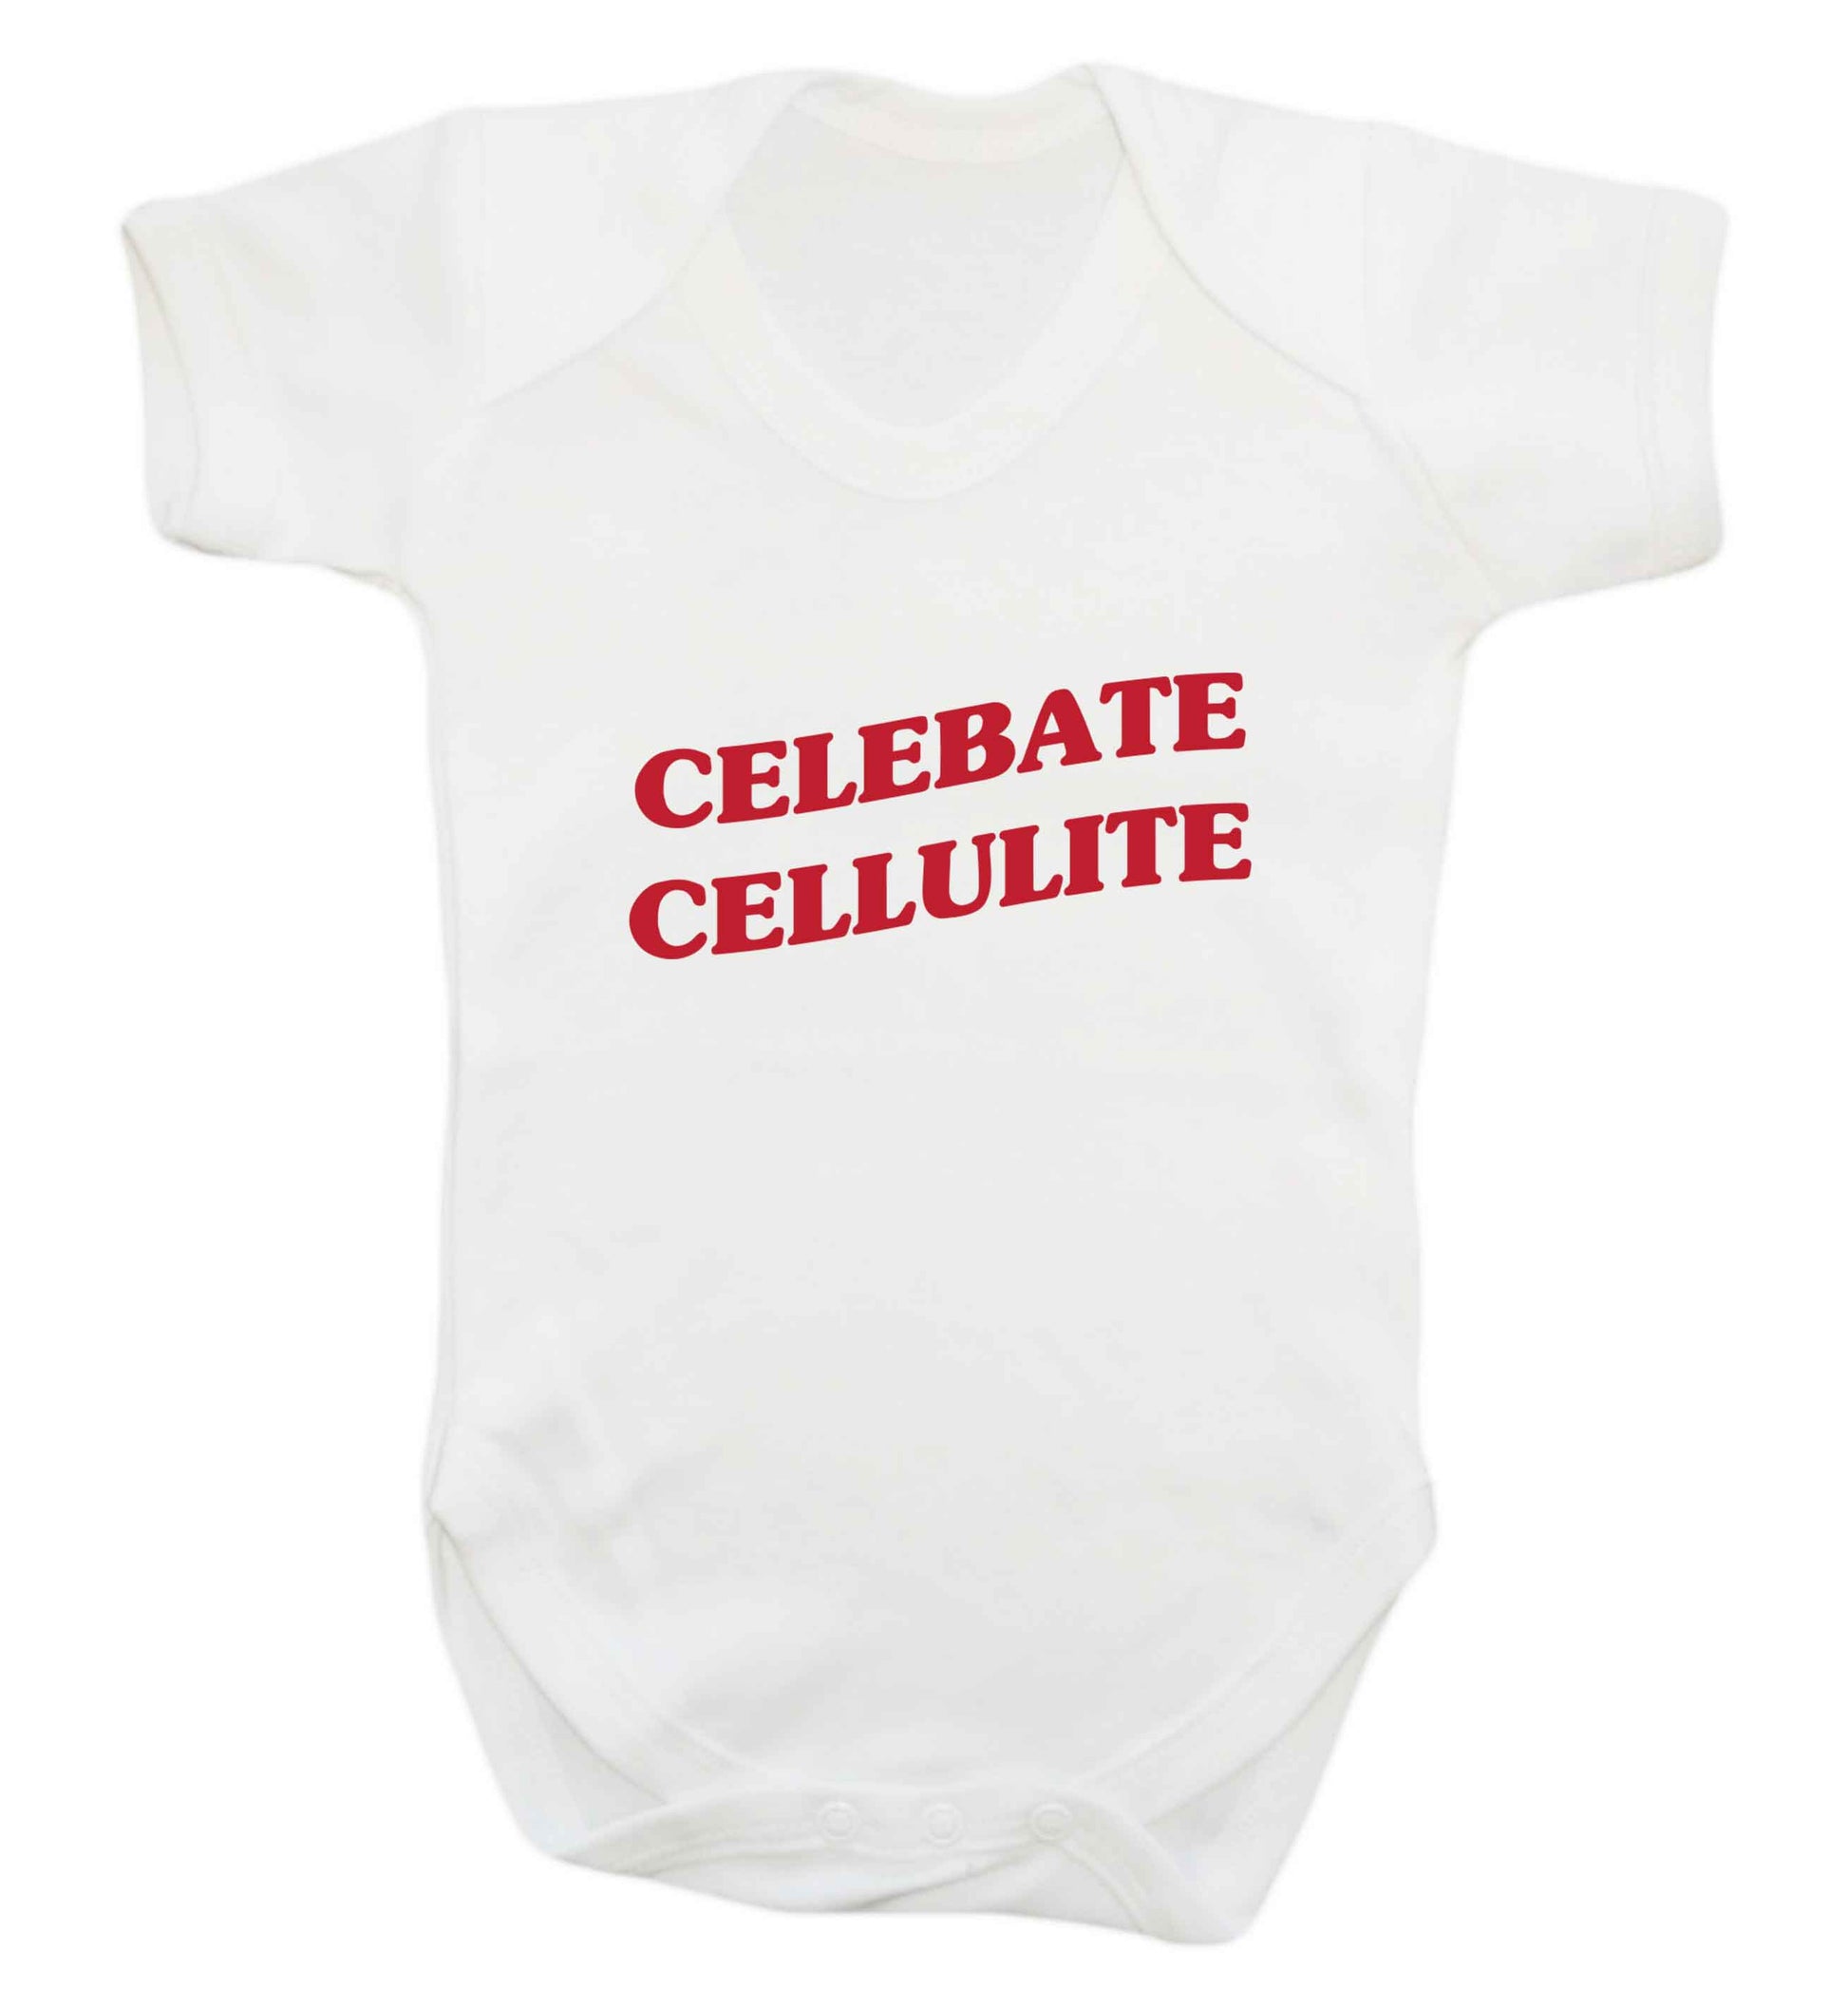 Celebrate cellulite baby vest white 18-24 months